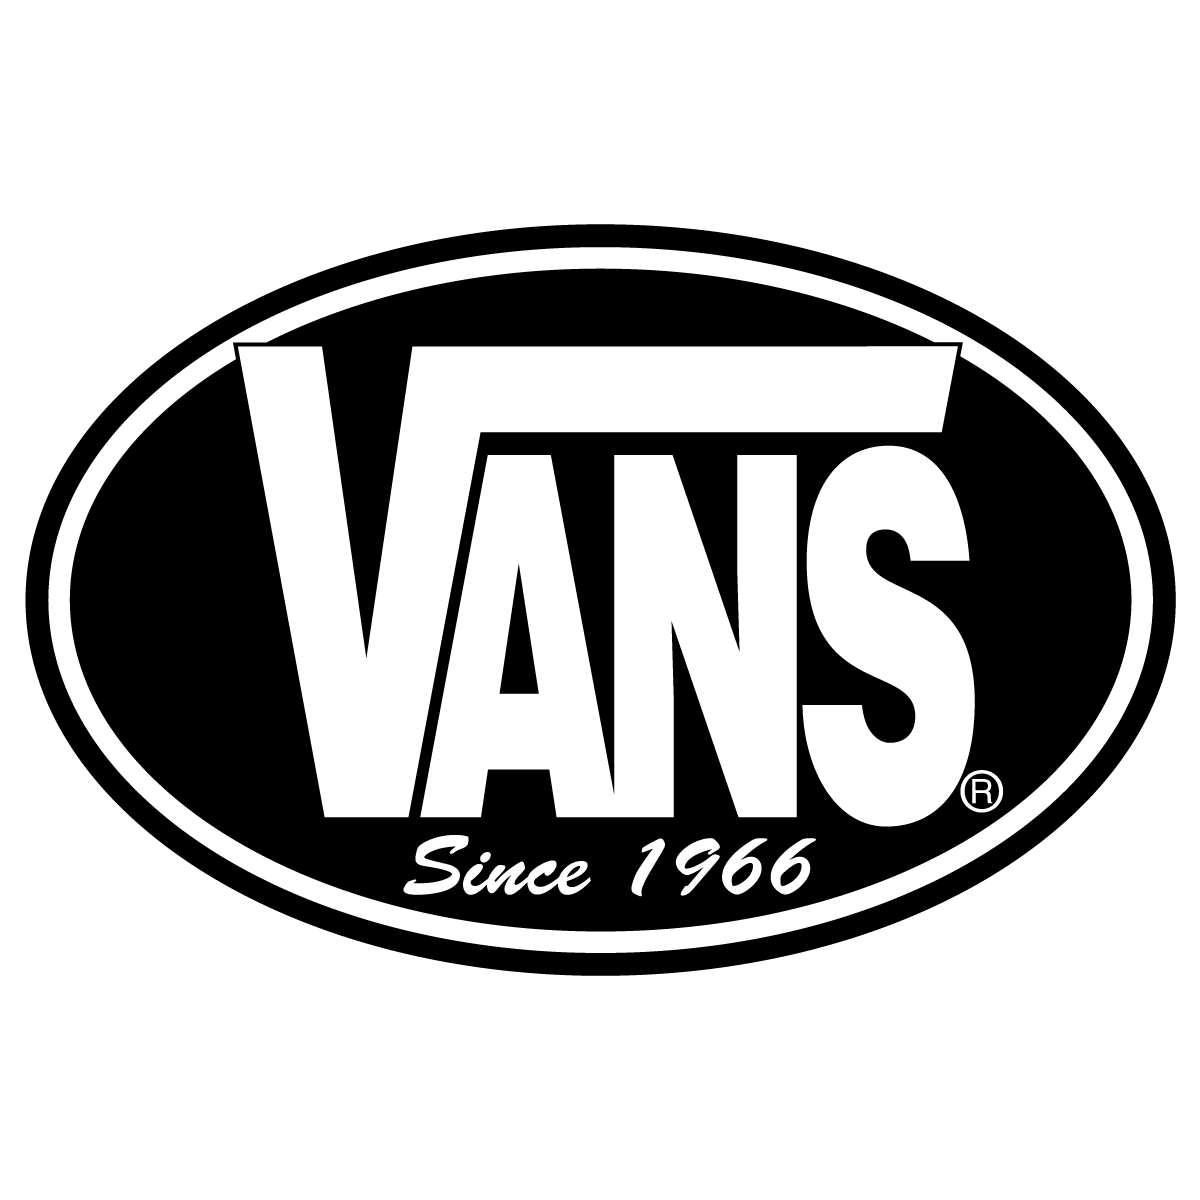 vans since 1966 logo vector silhouette #7842